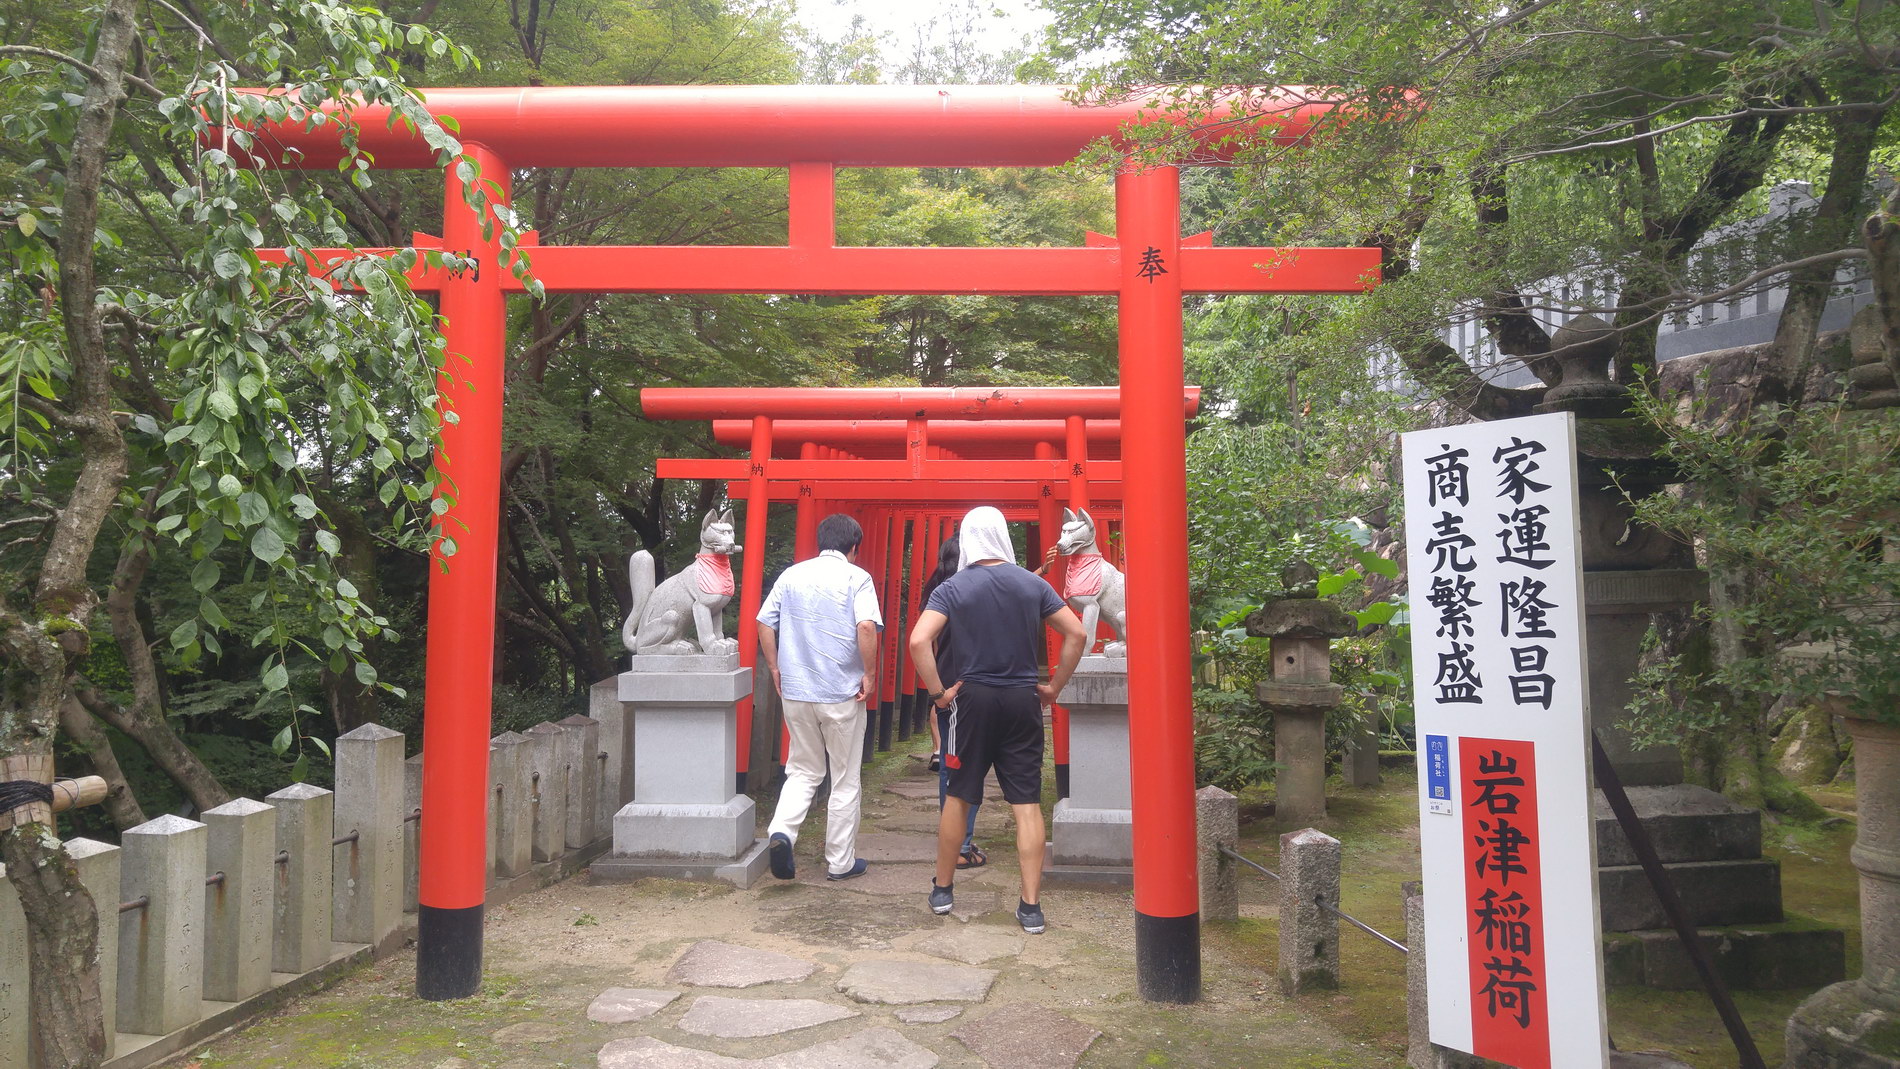 Field trip to local shrine with Yamaguchi sensei